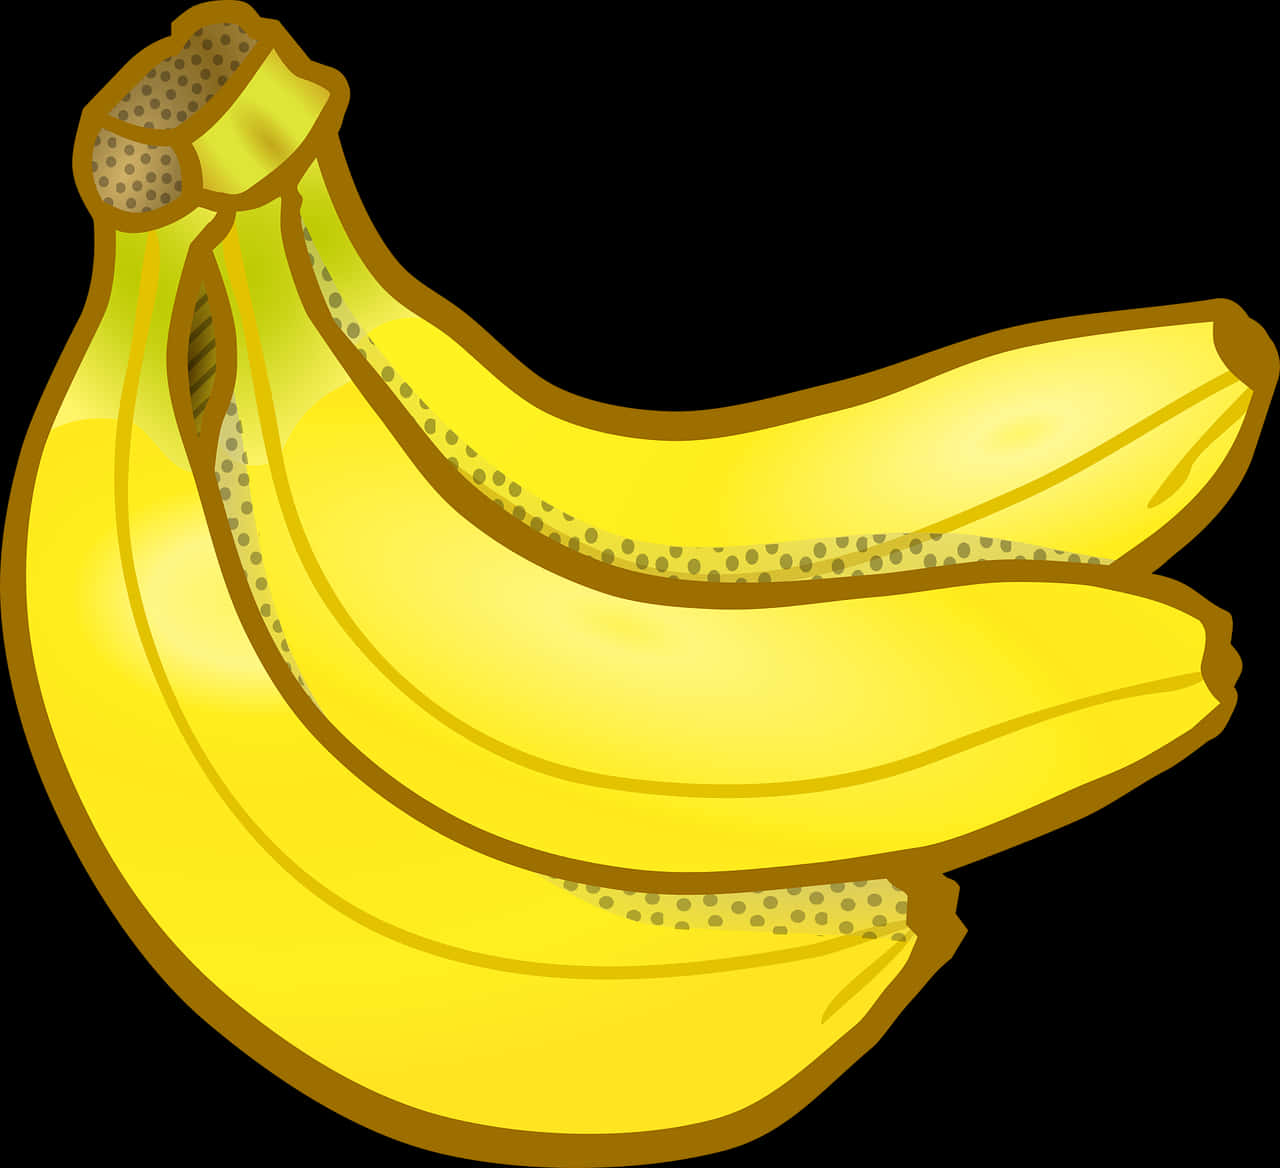 Ripe Banana Cluster Illustration PNG